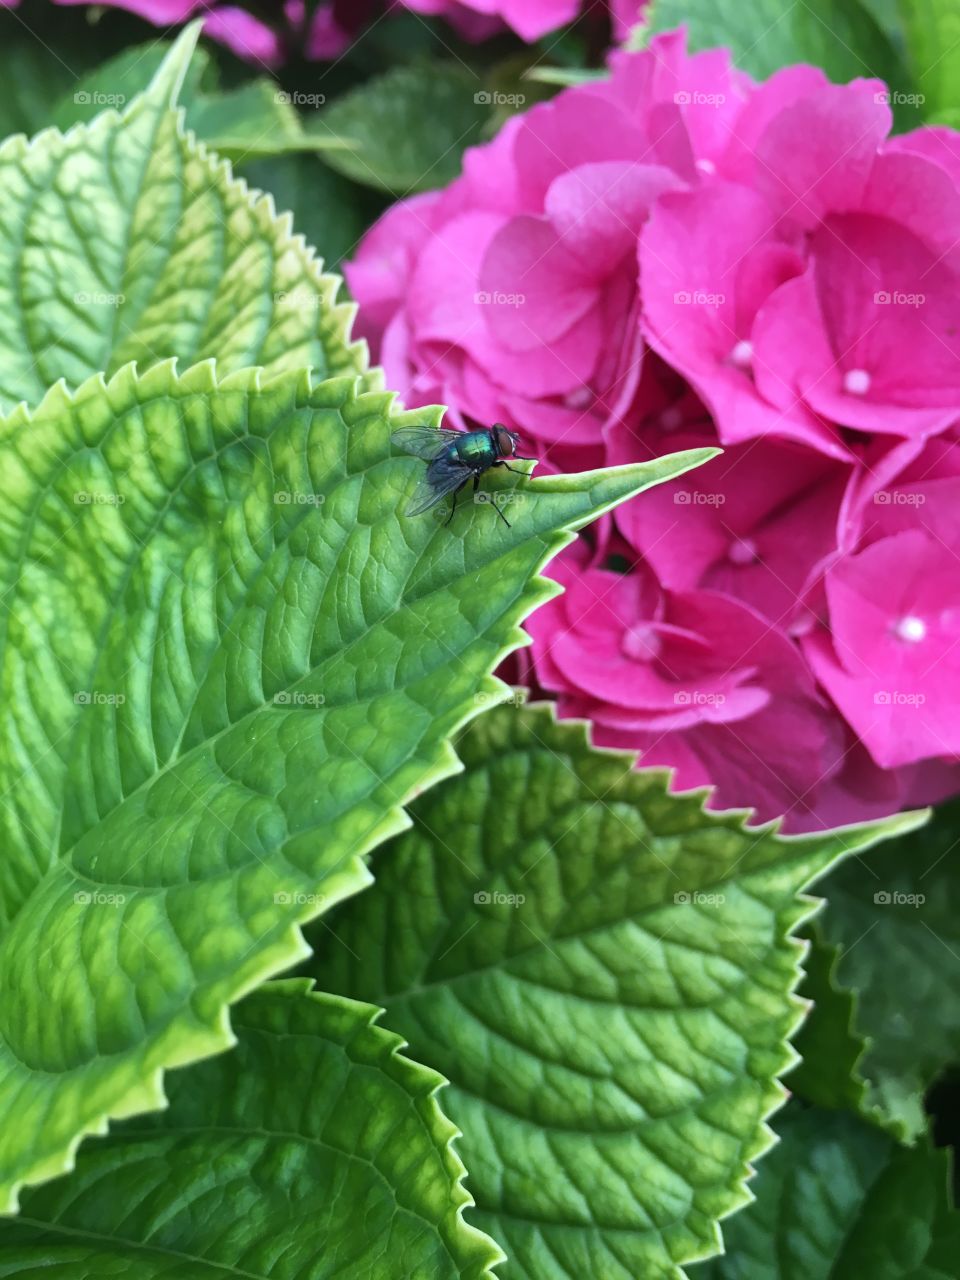 Fly on a leaf in a flower garden